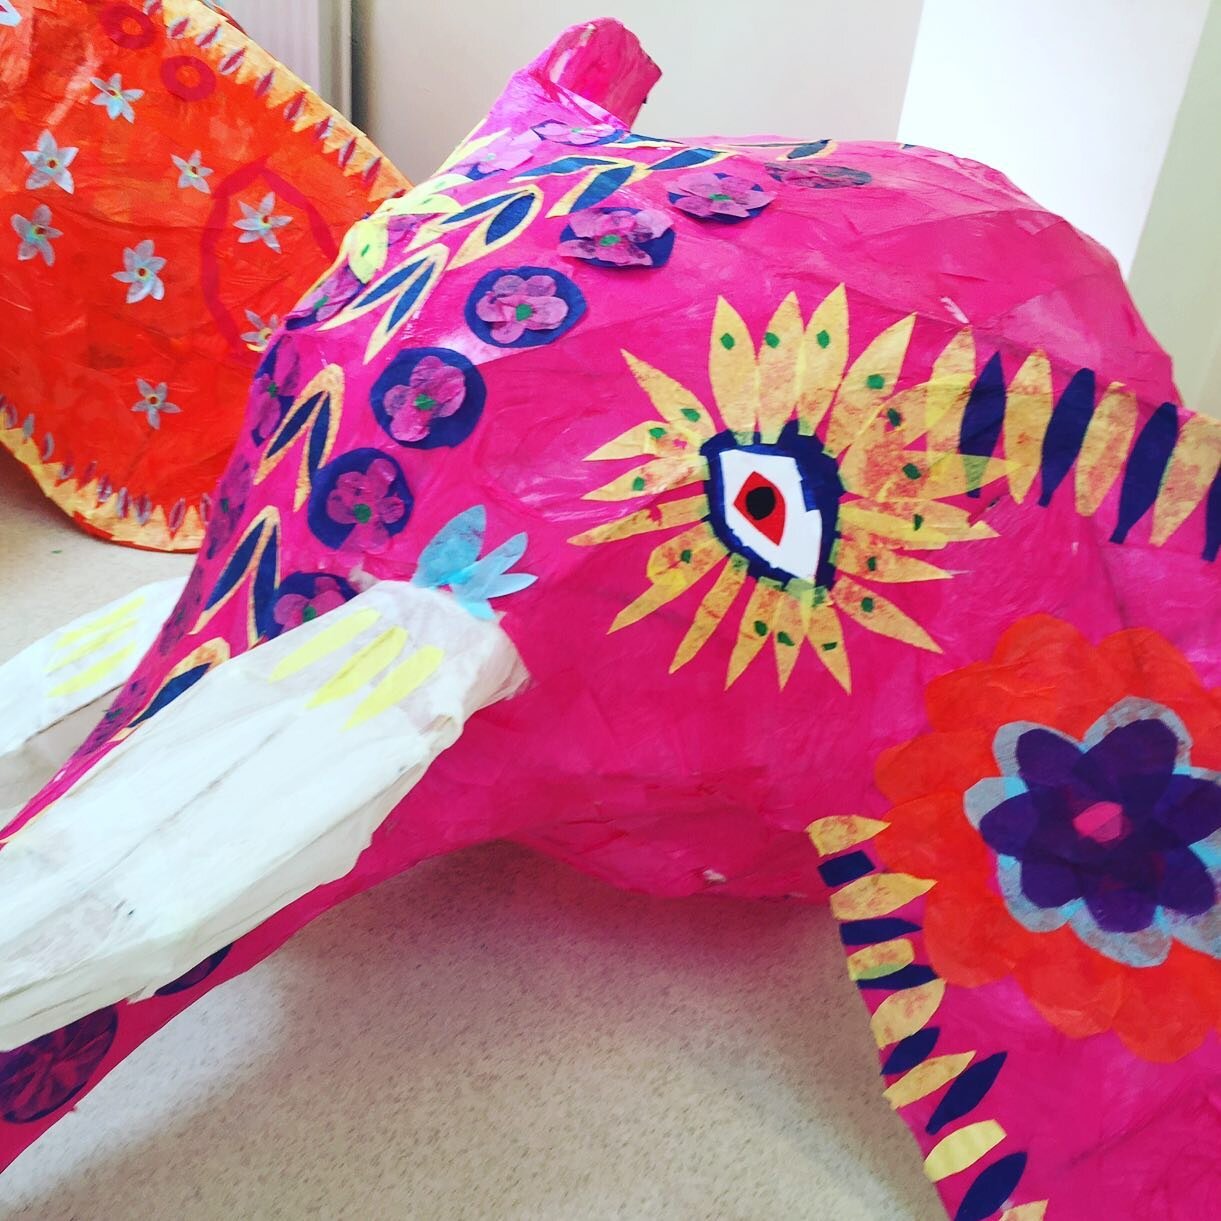 Giant elephant head masks with rangoli inspired patterning #primaryschoolart #schoolartworkshops #teachergram #theprimaryteacherresource #artworkshop #willow #willowsculpture #elephant #masks #animalmasks #theschoolartist